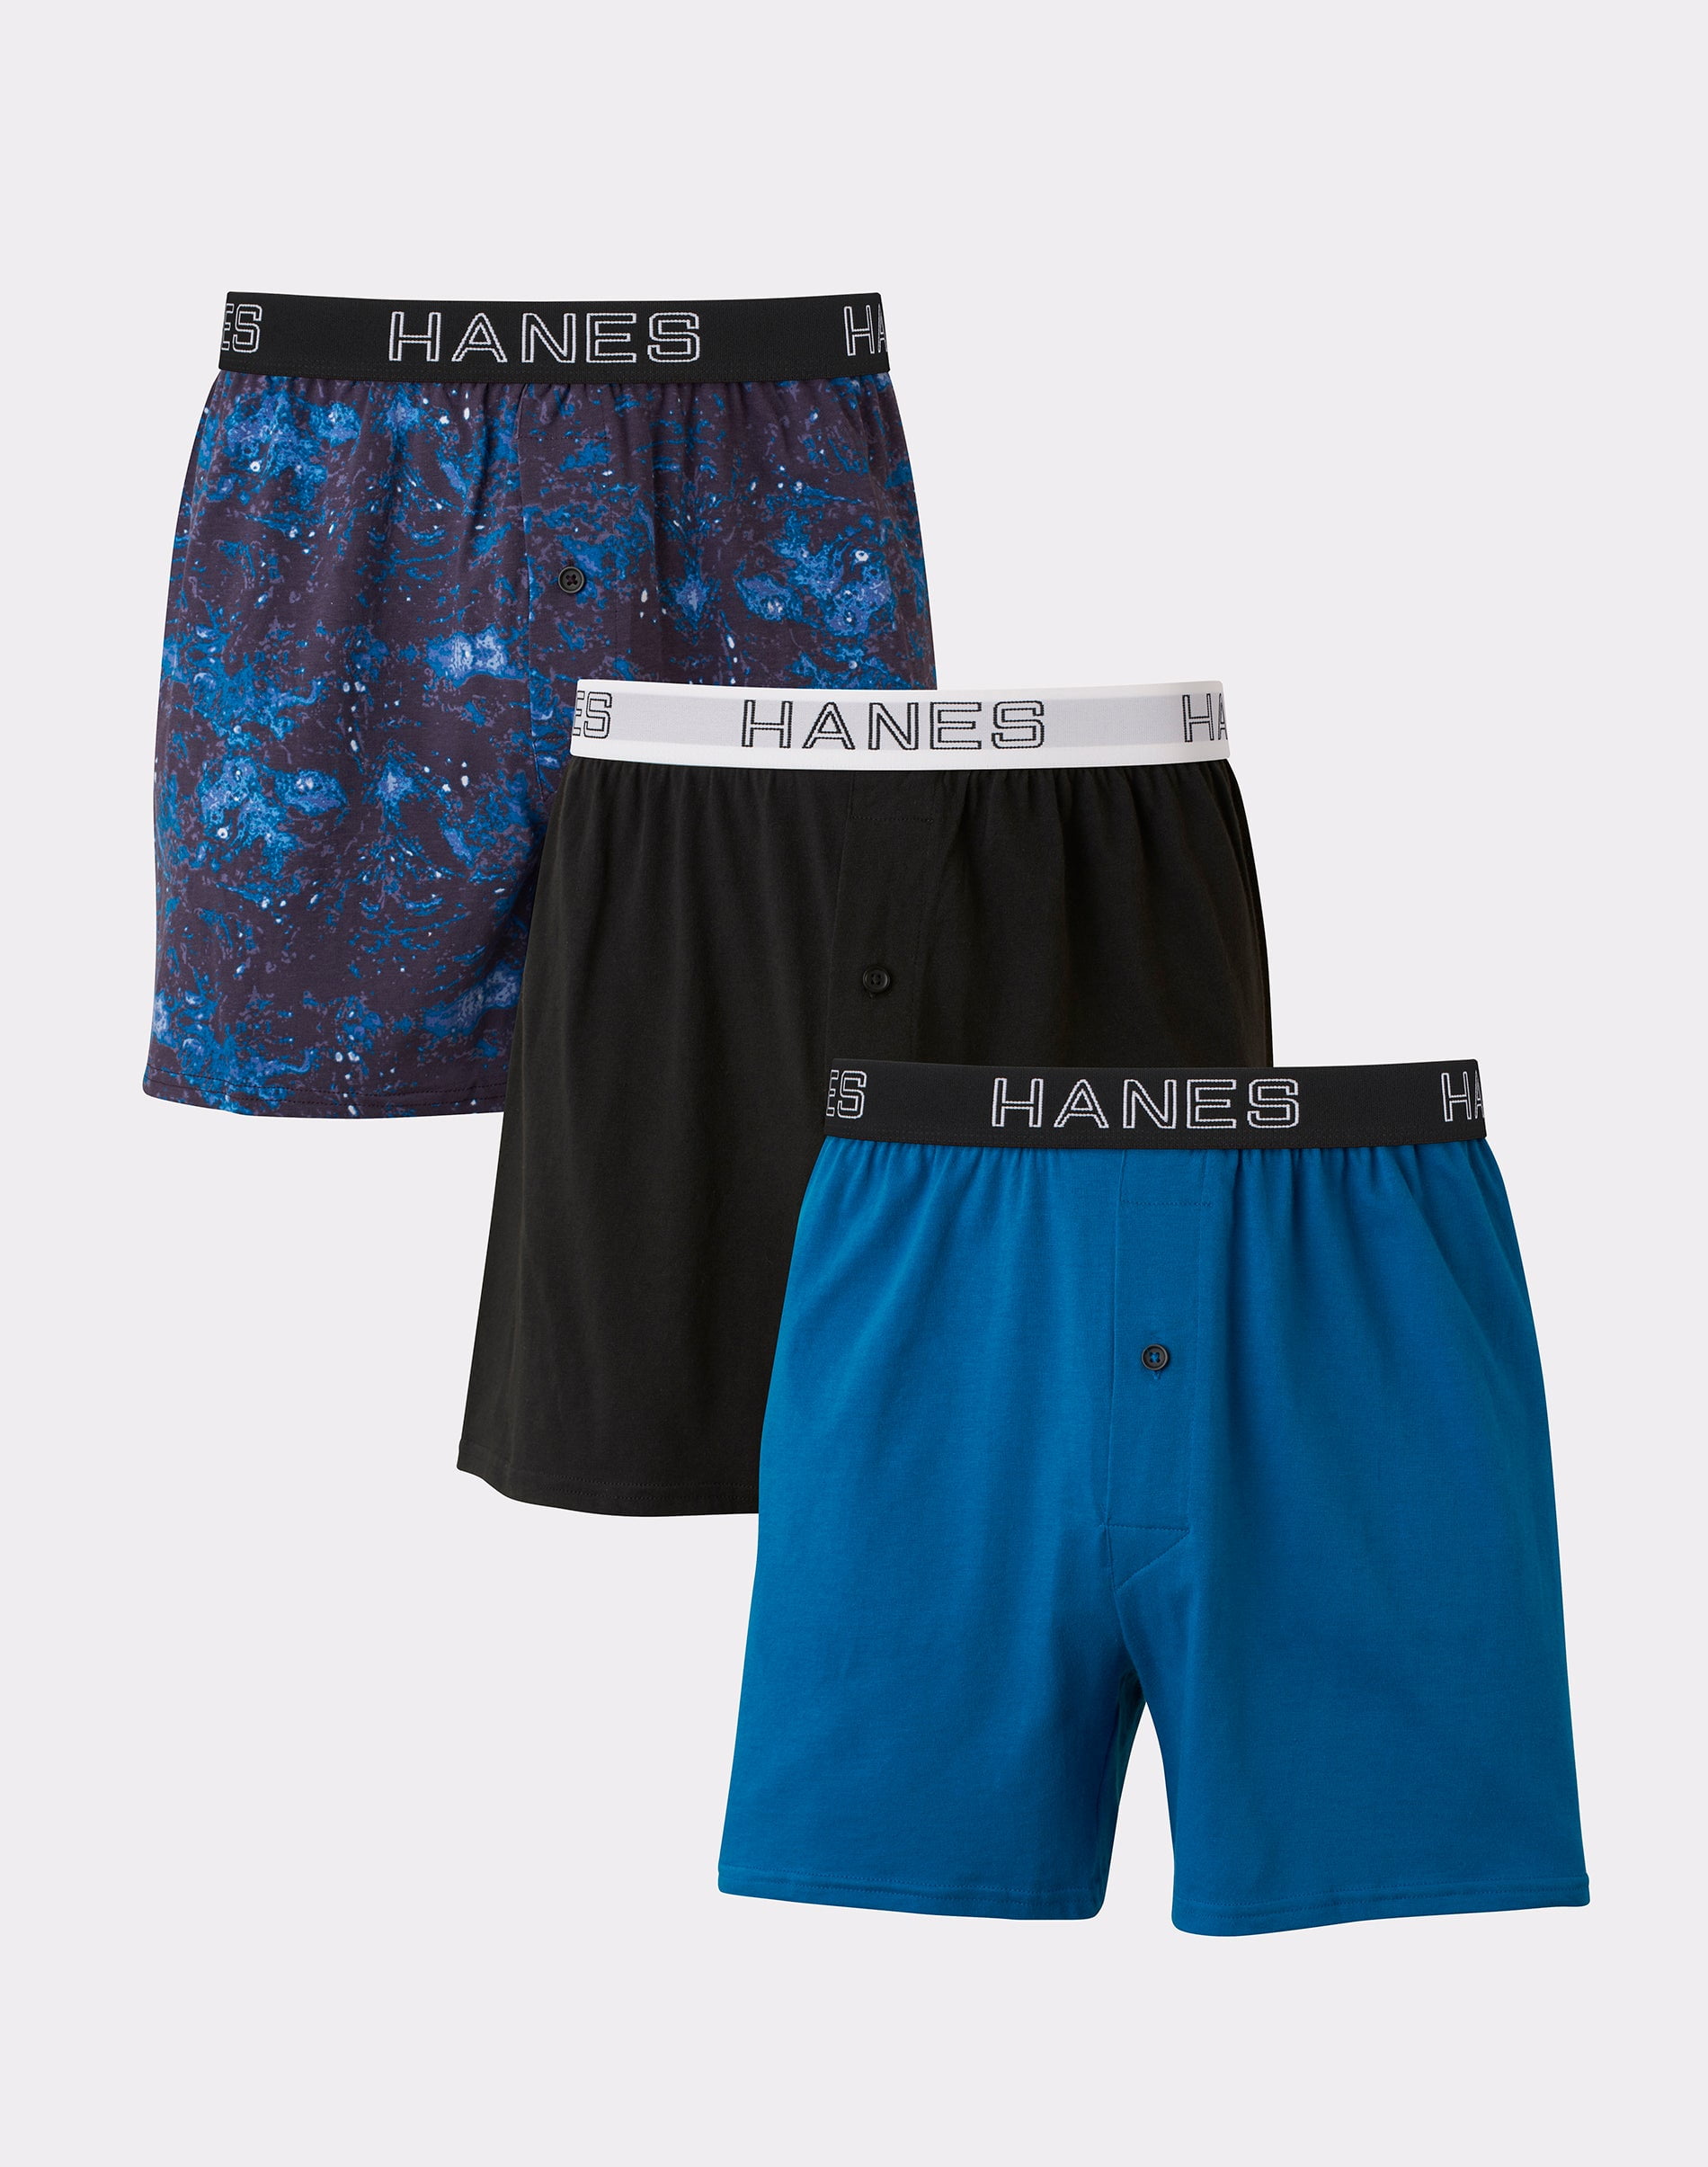 Hanes Premium Men's 4pk Knit Boxers Various Colors Medium, 50% OFF